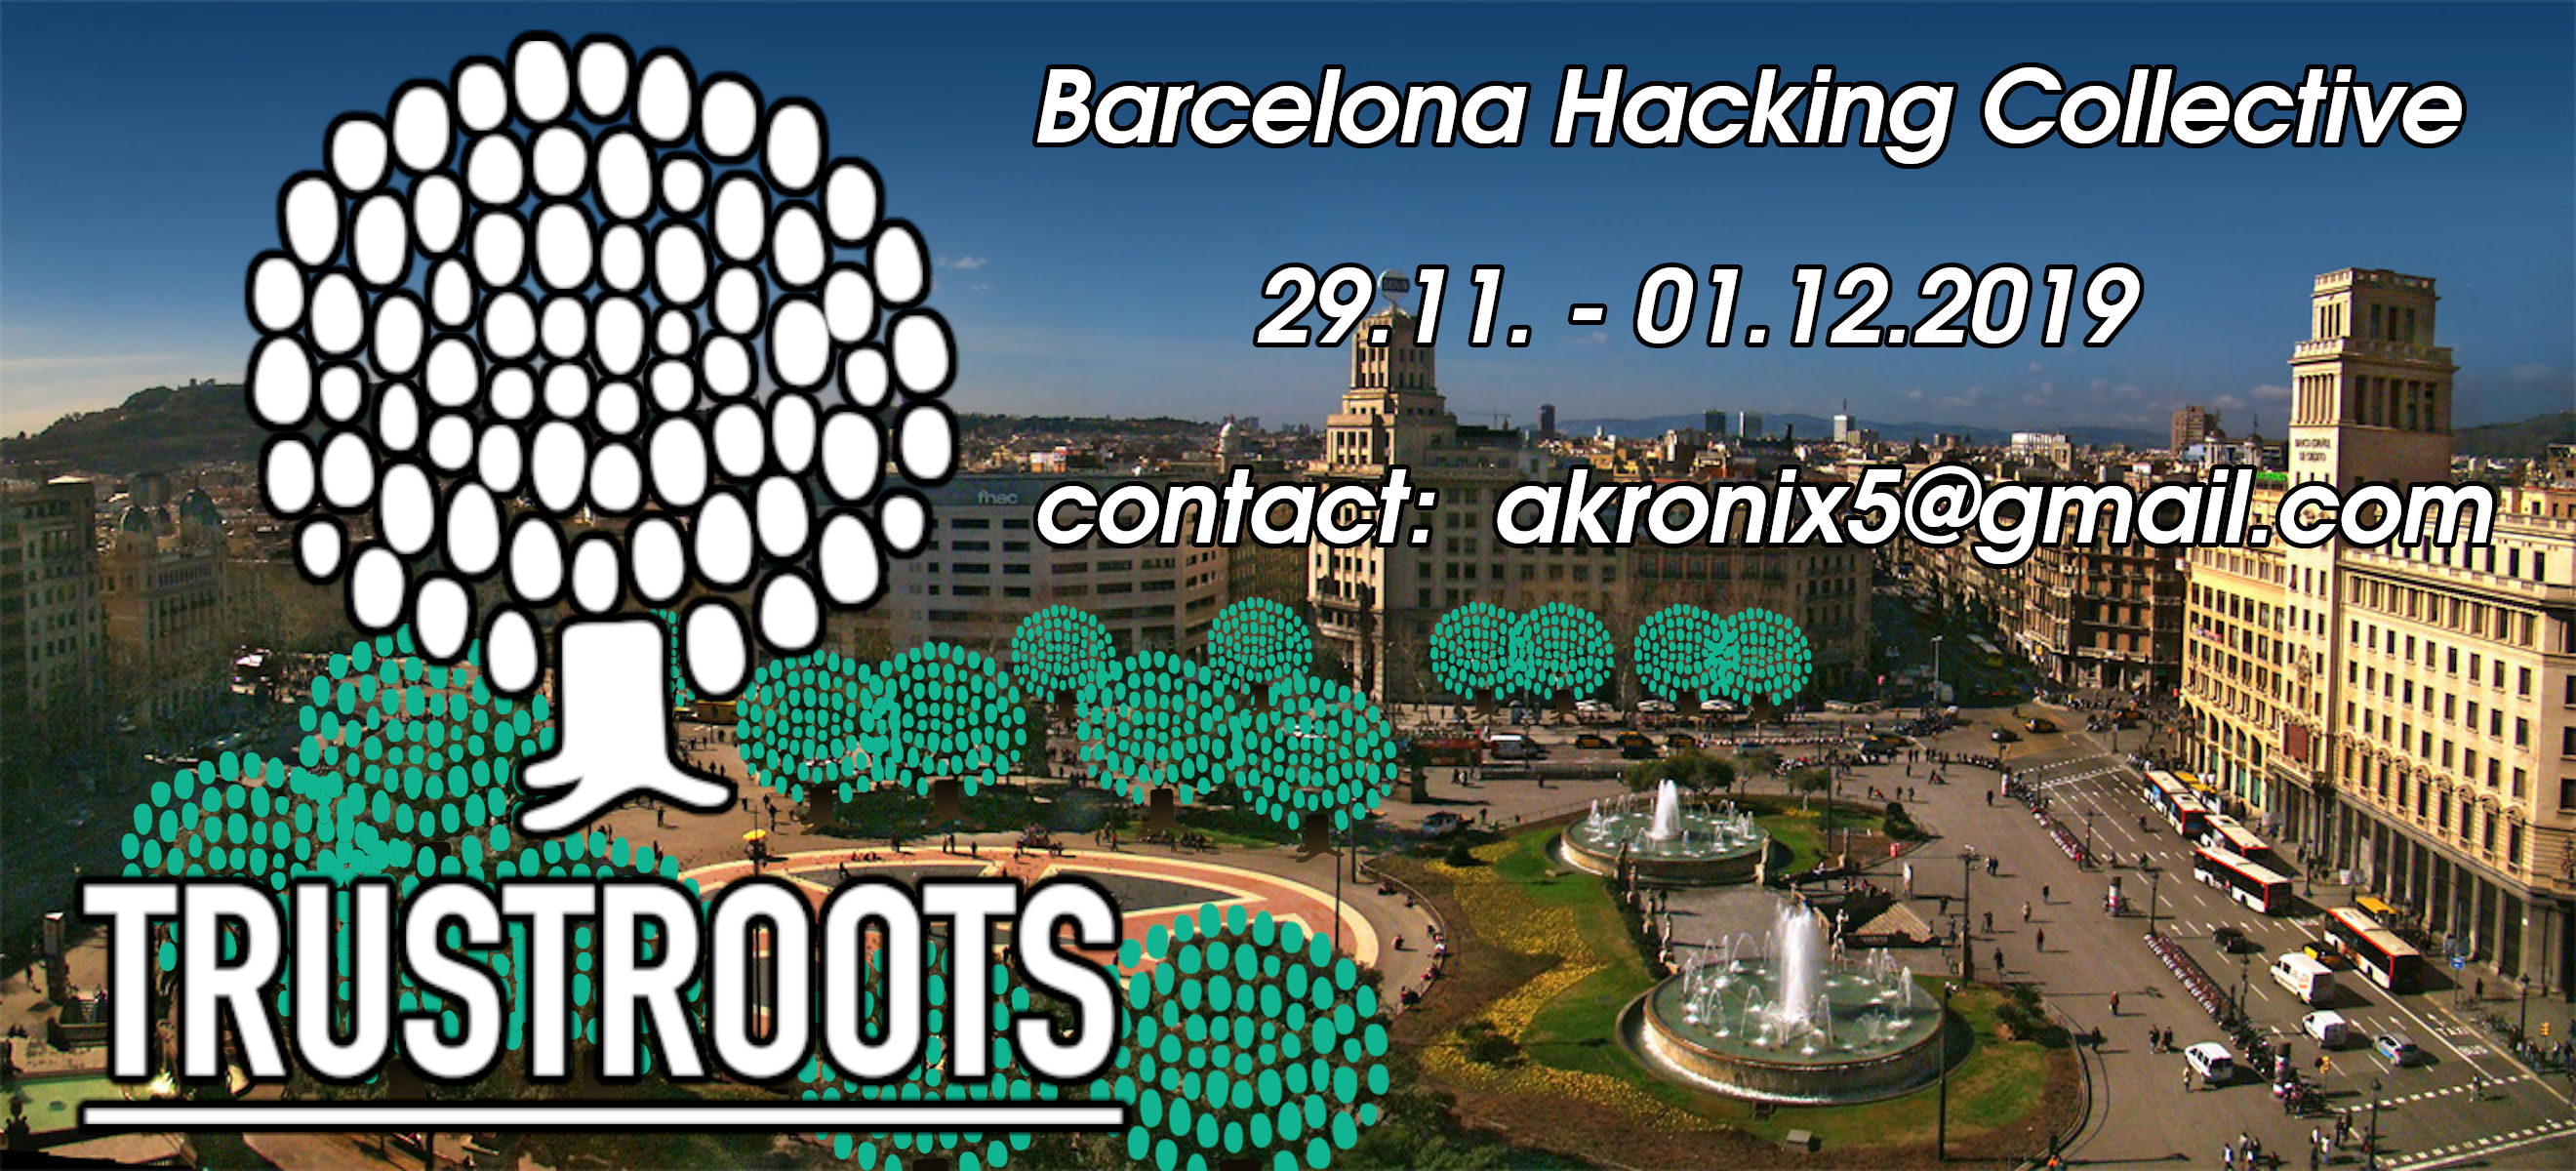 Barcelona Hacking Collective